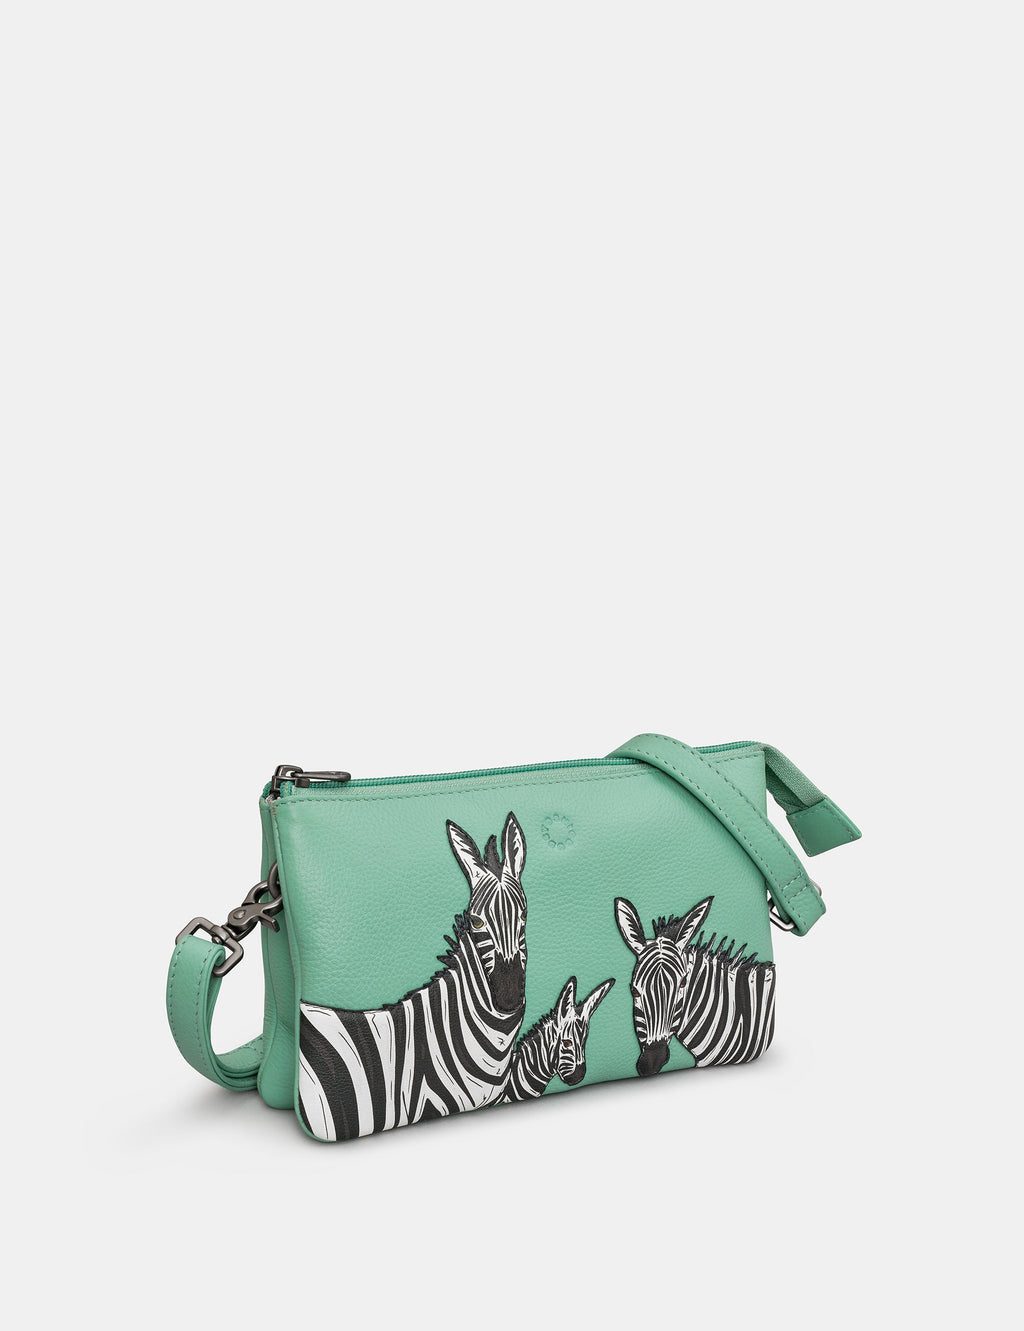 Yoshi - Mint Green Zebra Leather Small Cross Body Bag